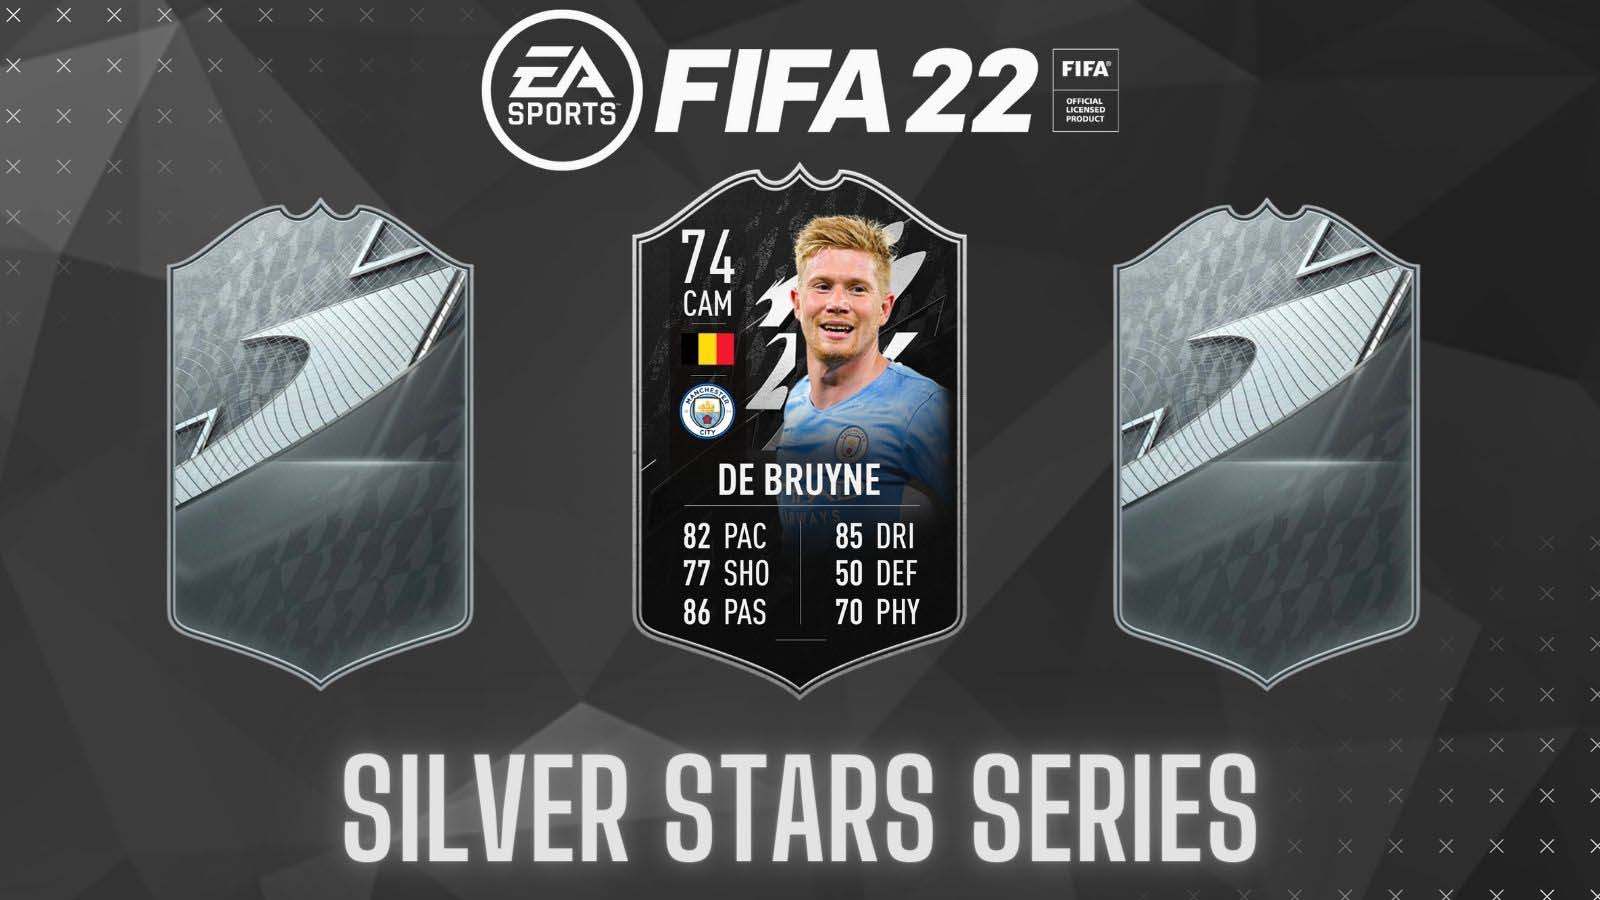 FIFA 22 Silver Star Series Leaks